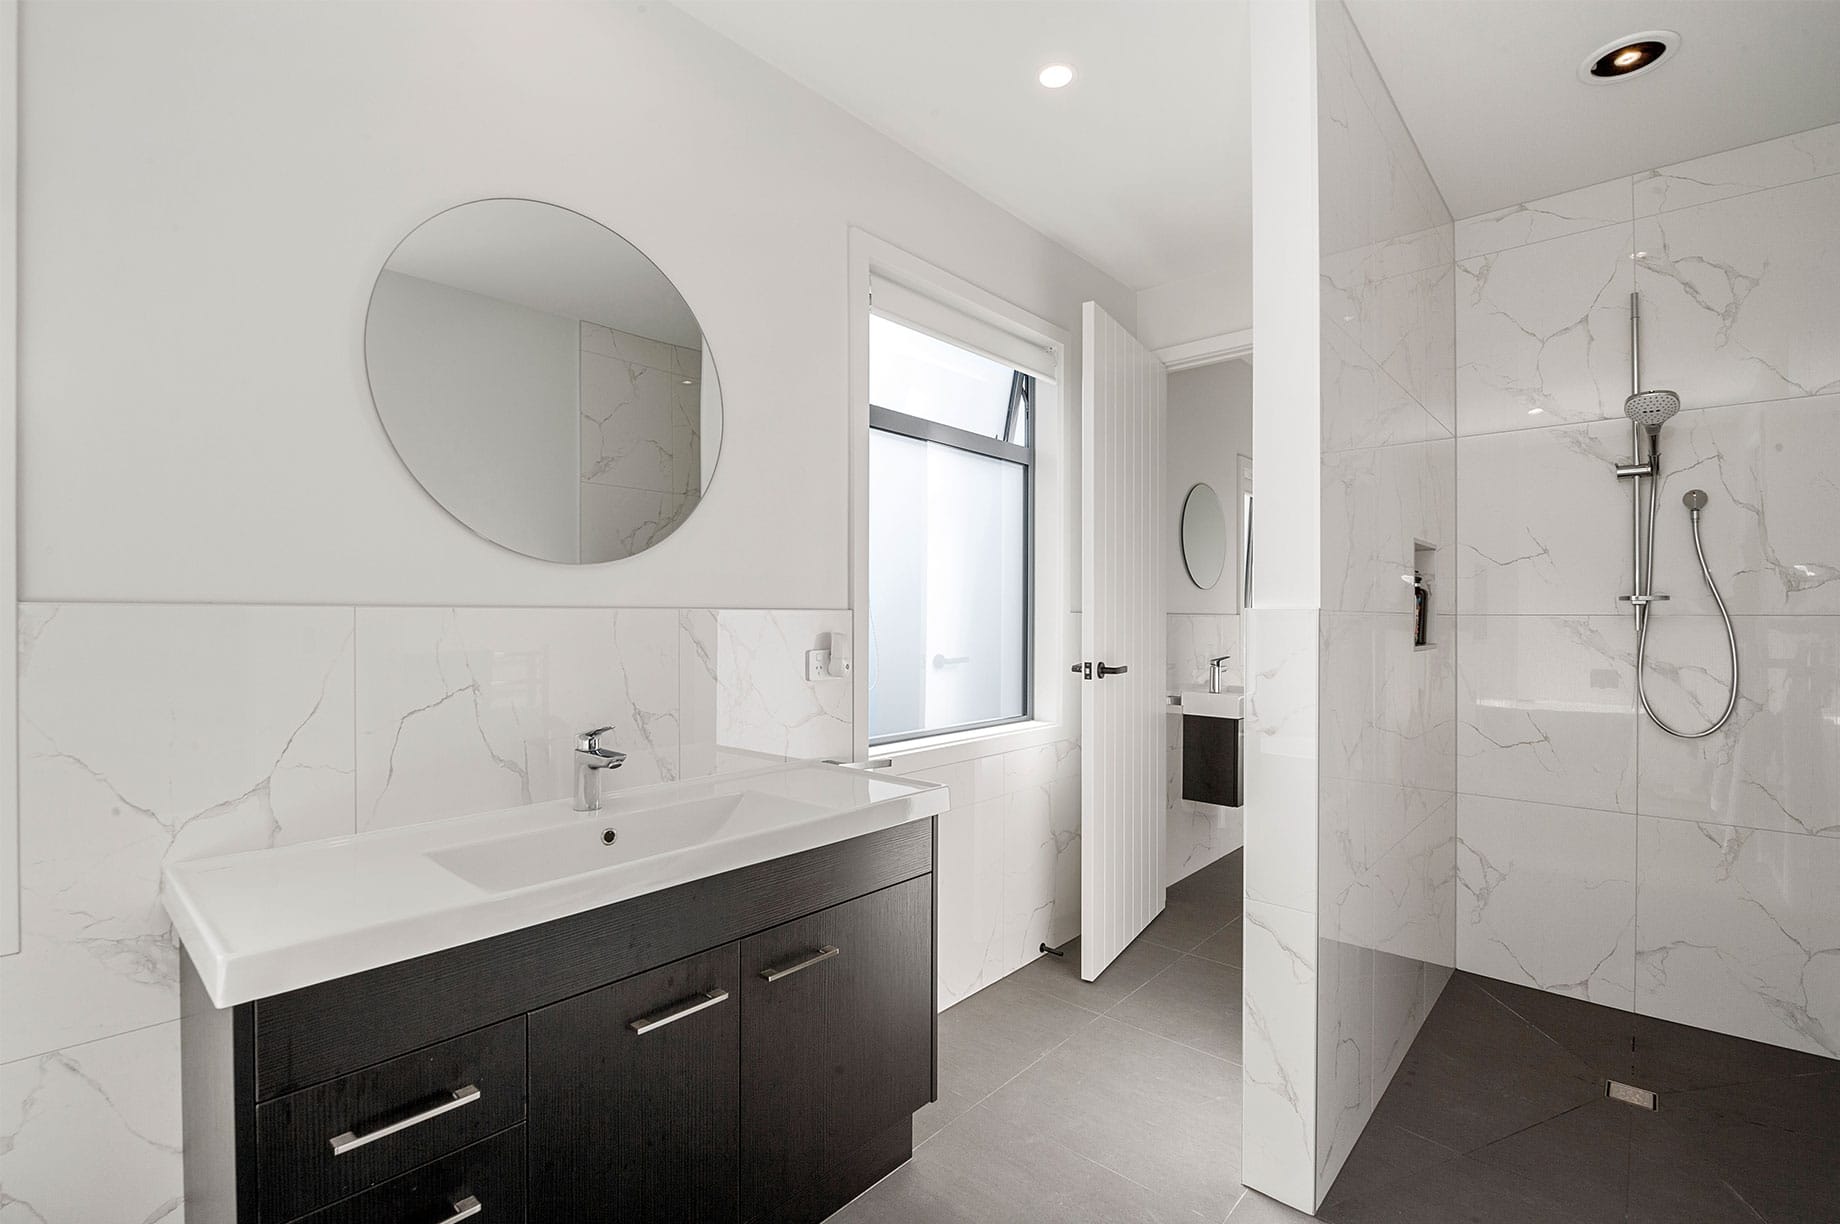 White and black marble tiled bathroom interior